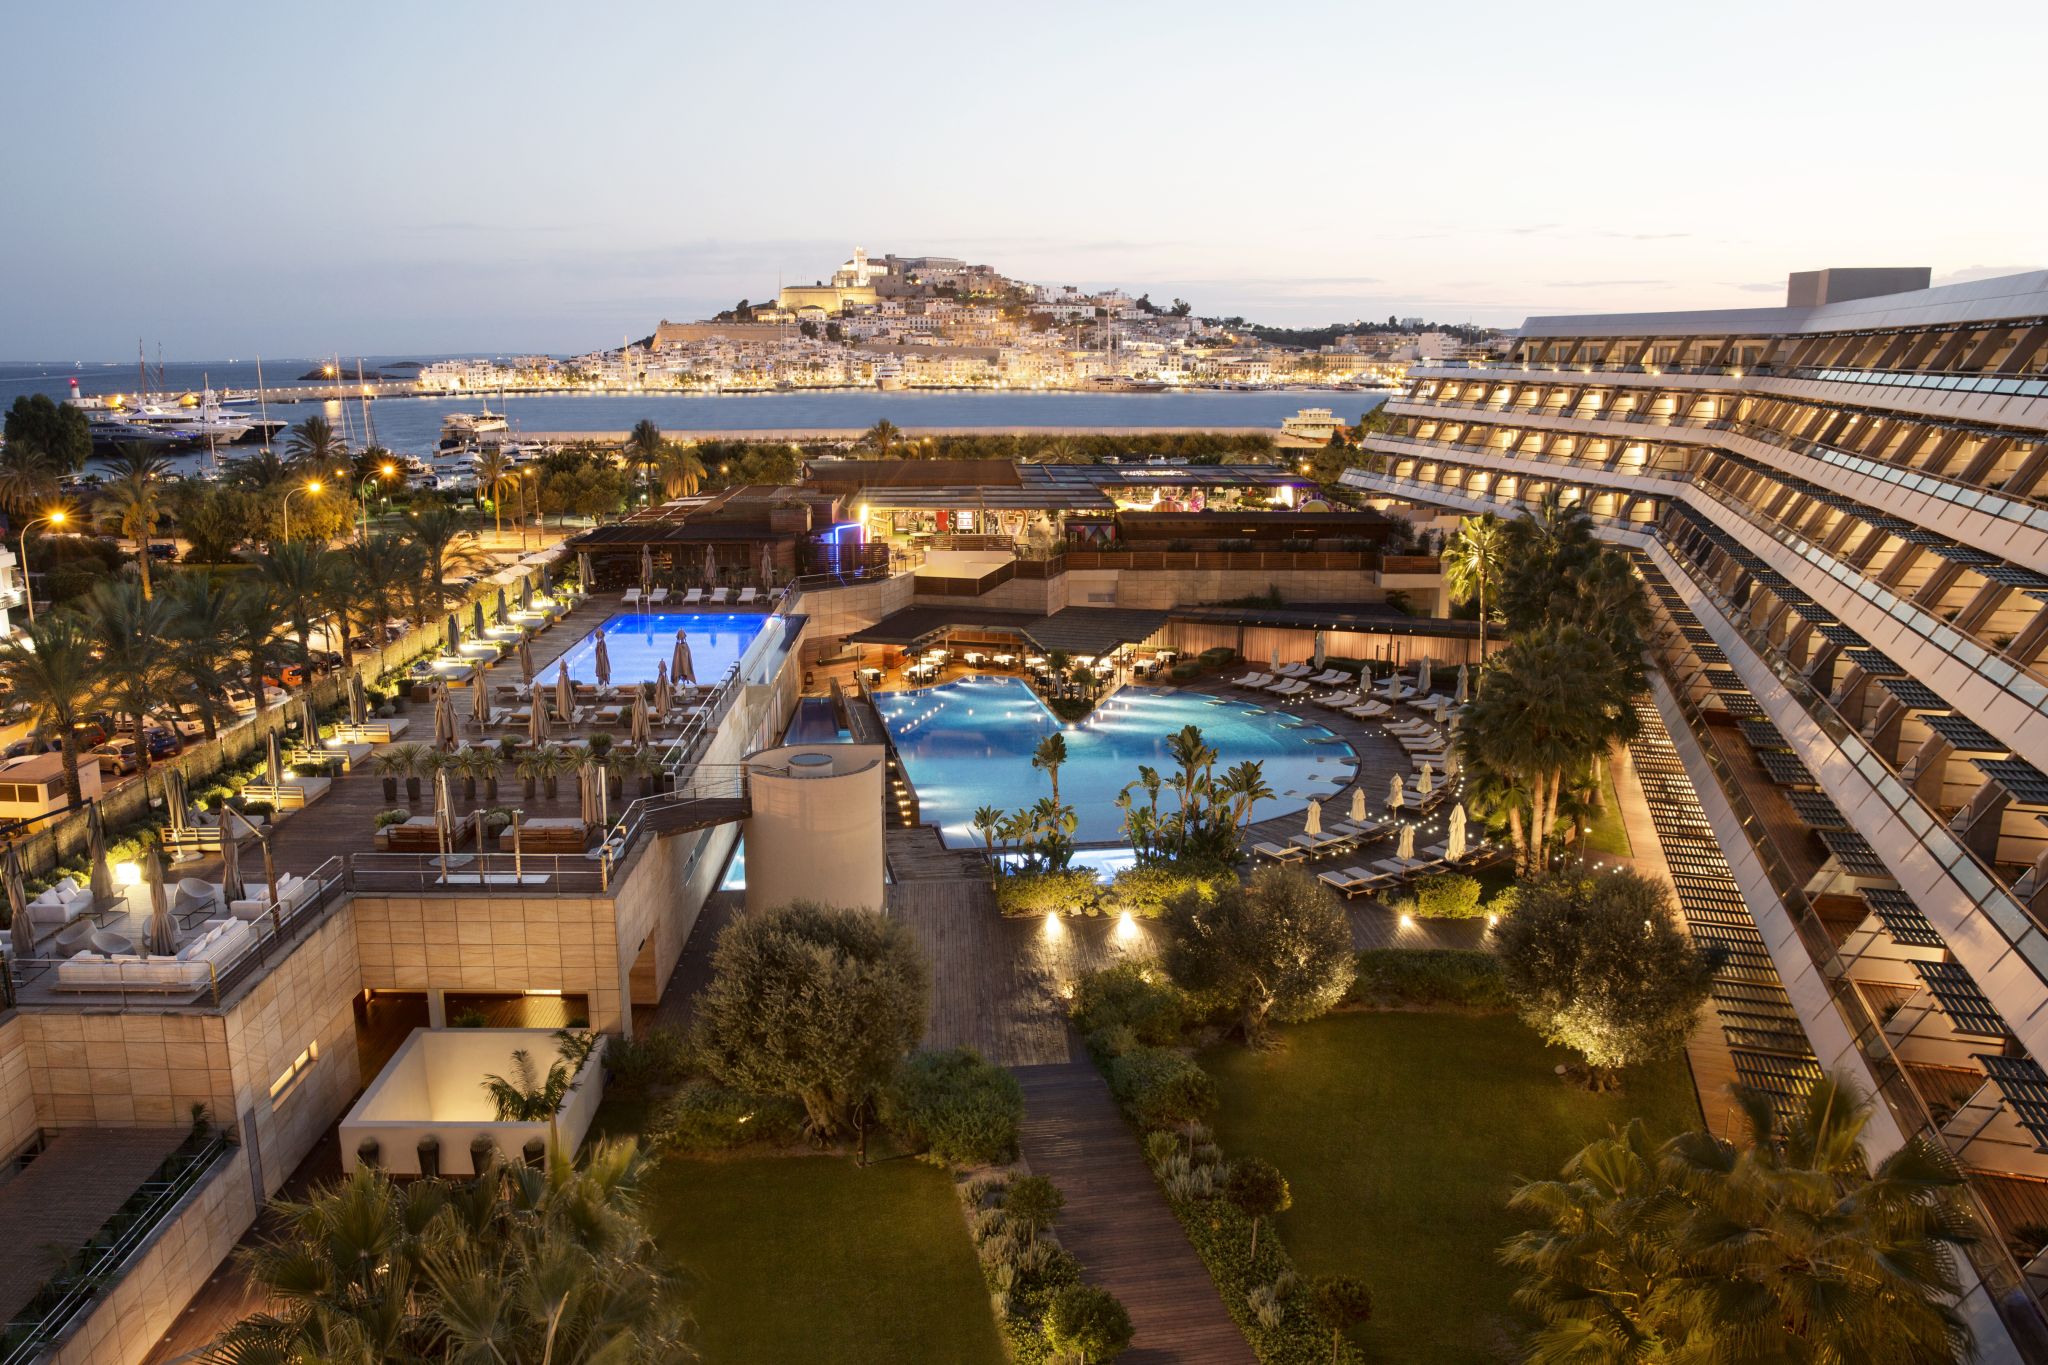 An Epicurean Revival with Chef Oscar Molina at Ibiza Gran Hotel